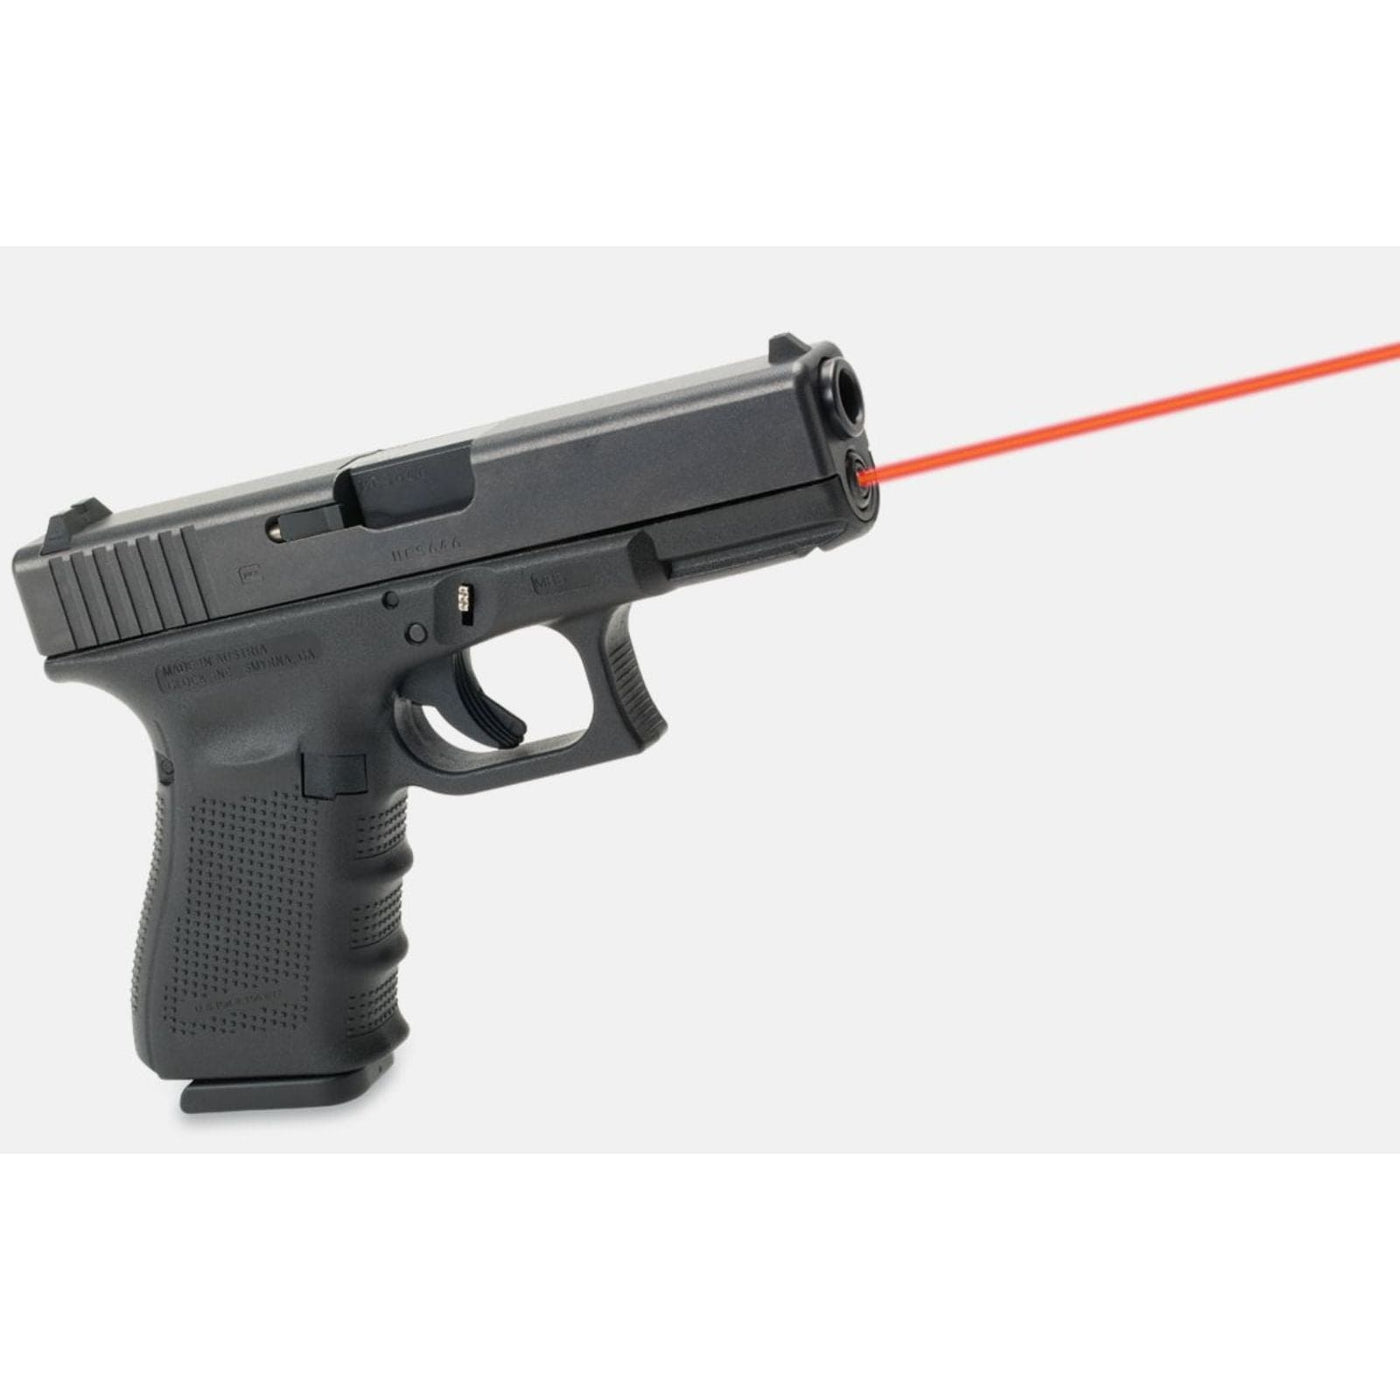 LaserMax LaserMax Guide Rod Laser Red Glock 23 Gen 4 Optics And Sights